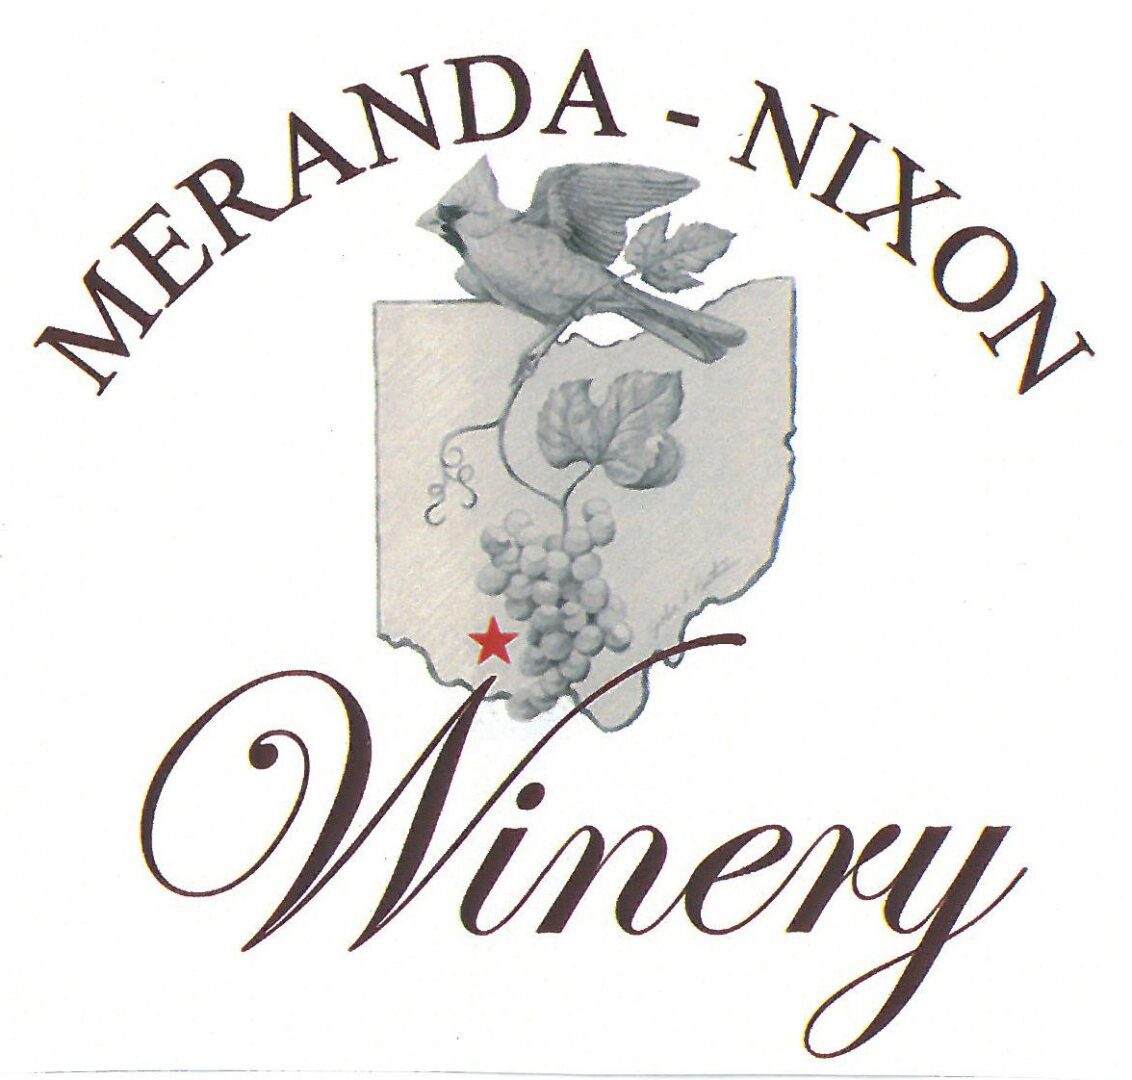 A picture of the logo for meranda nixon winery.